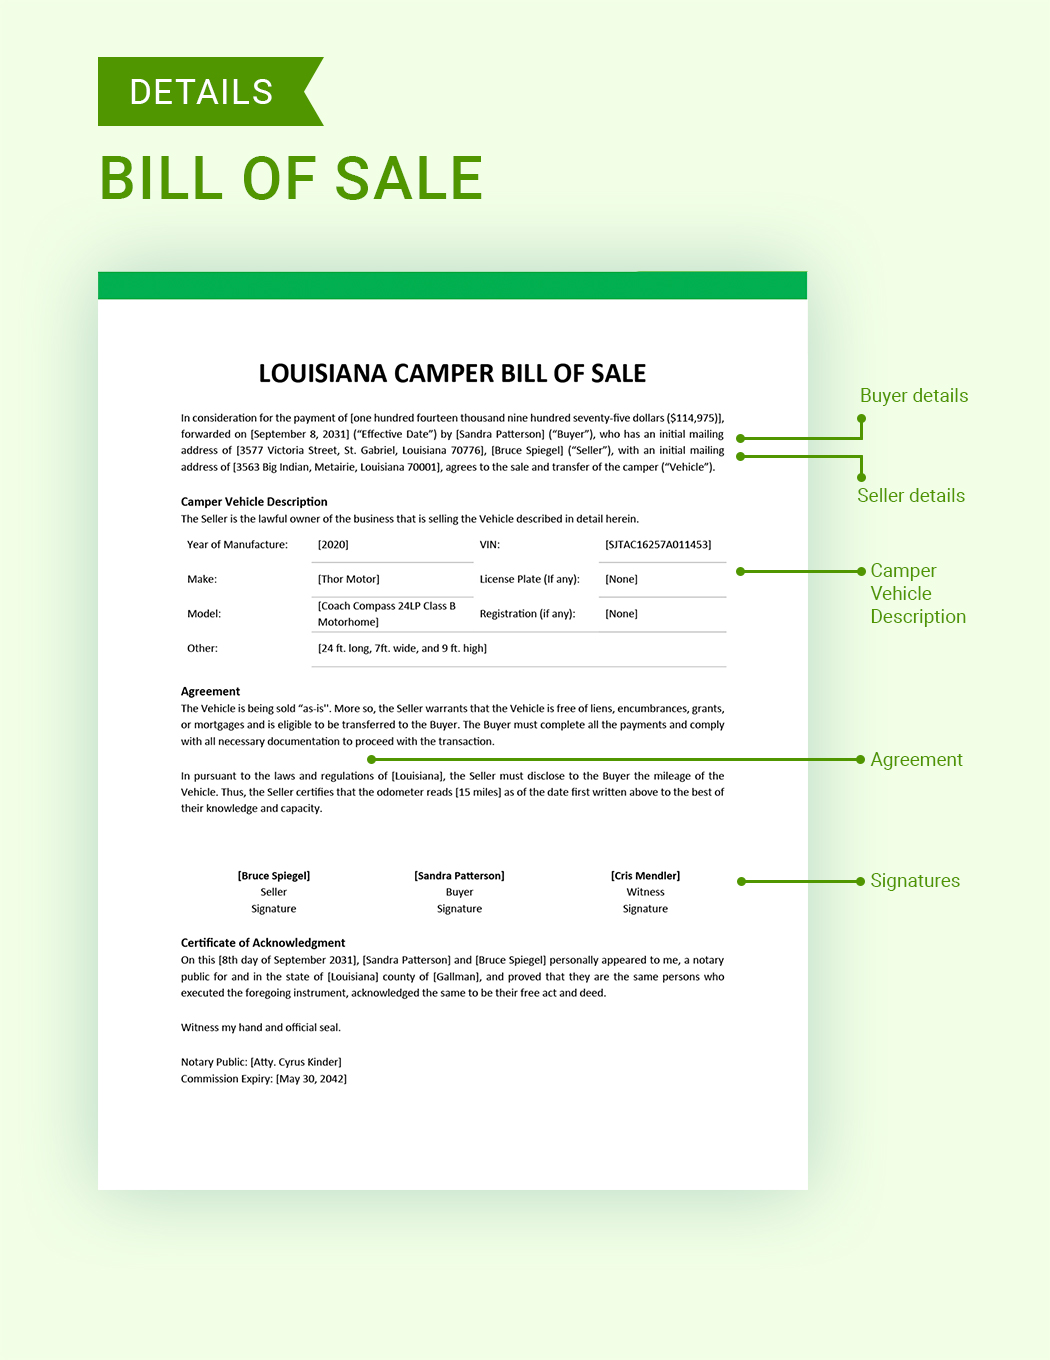 Louisiana Camper Bill of Sale Template